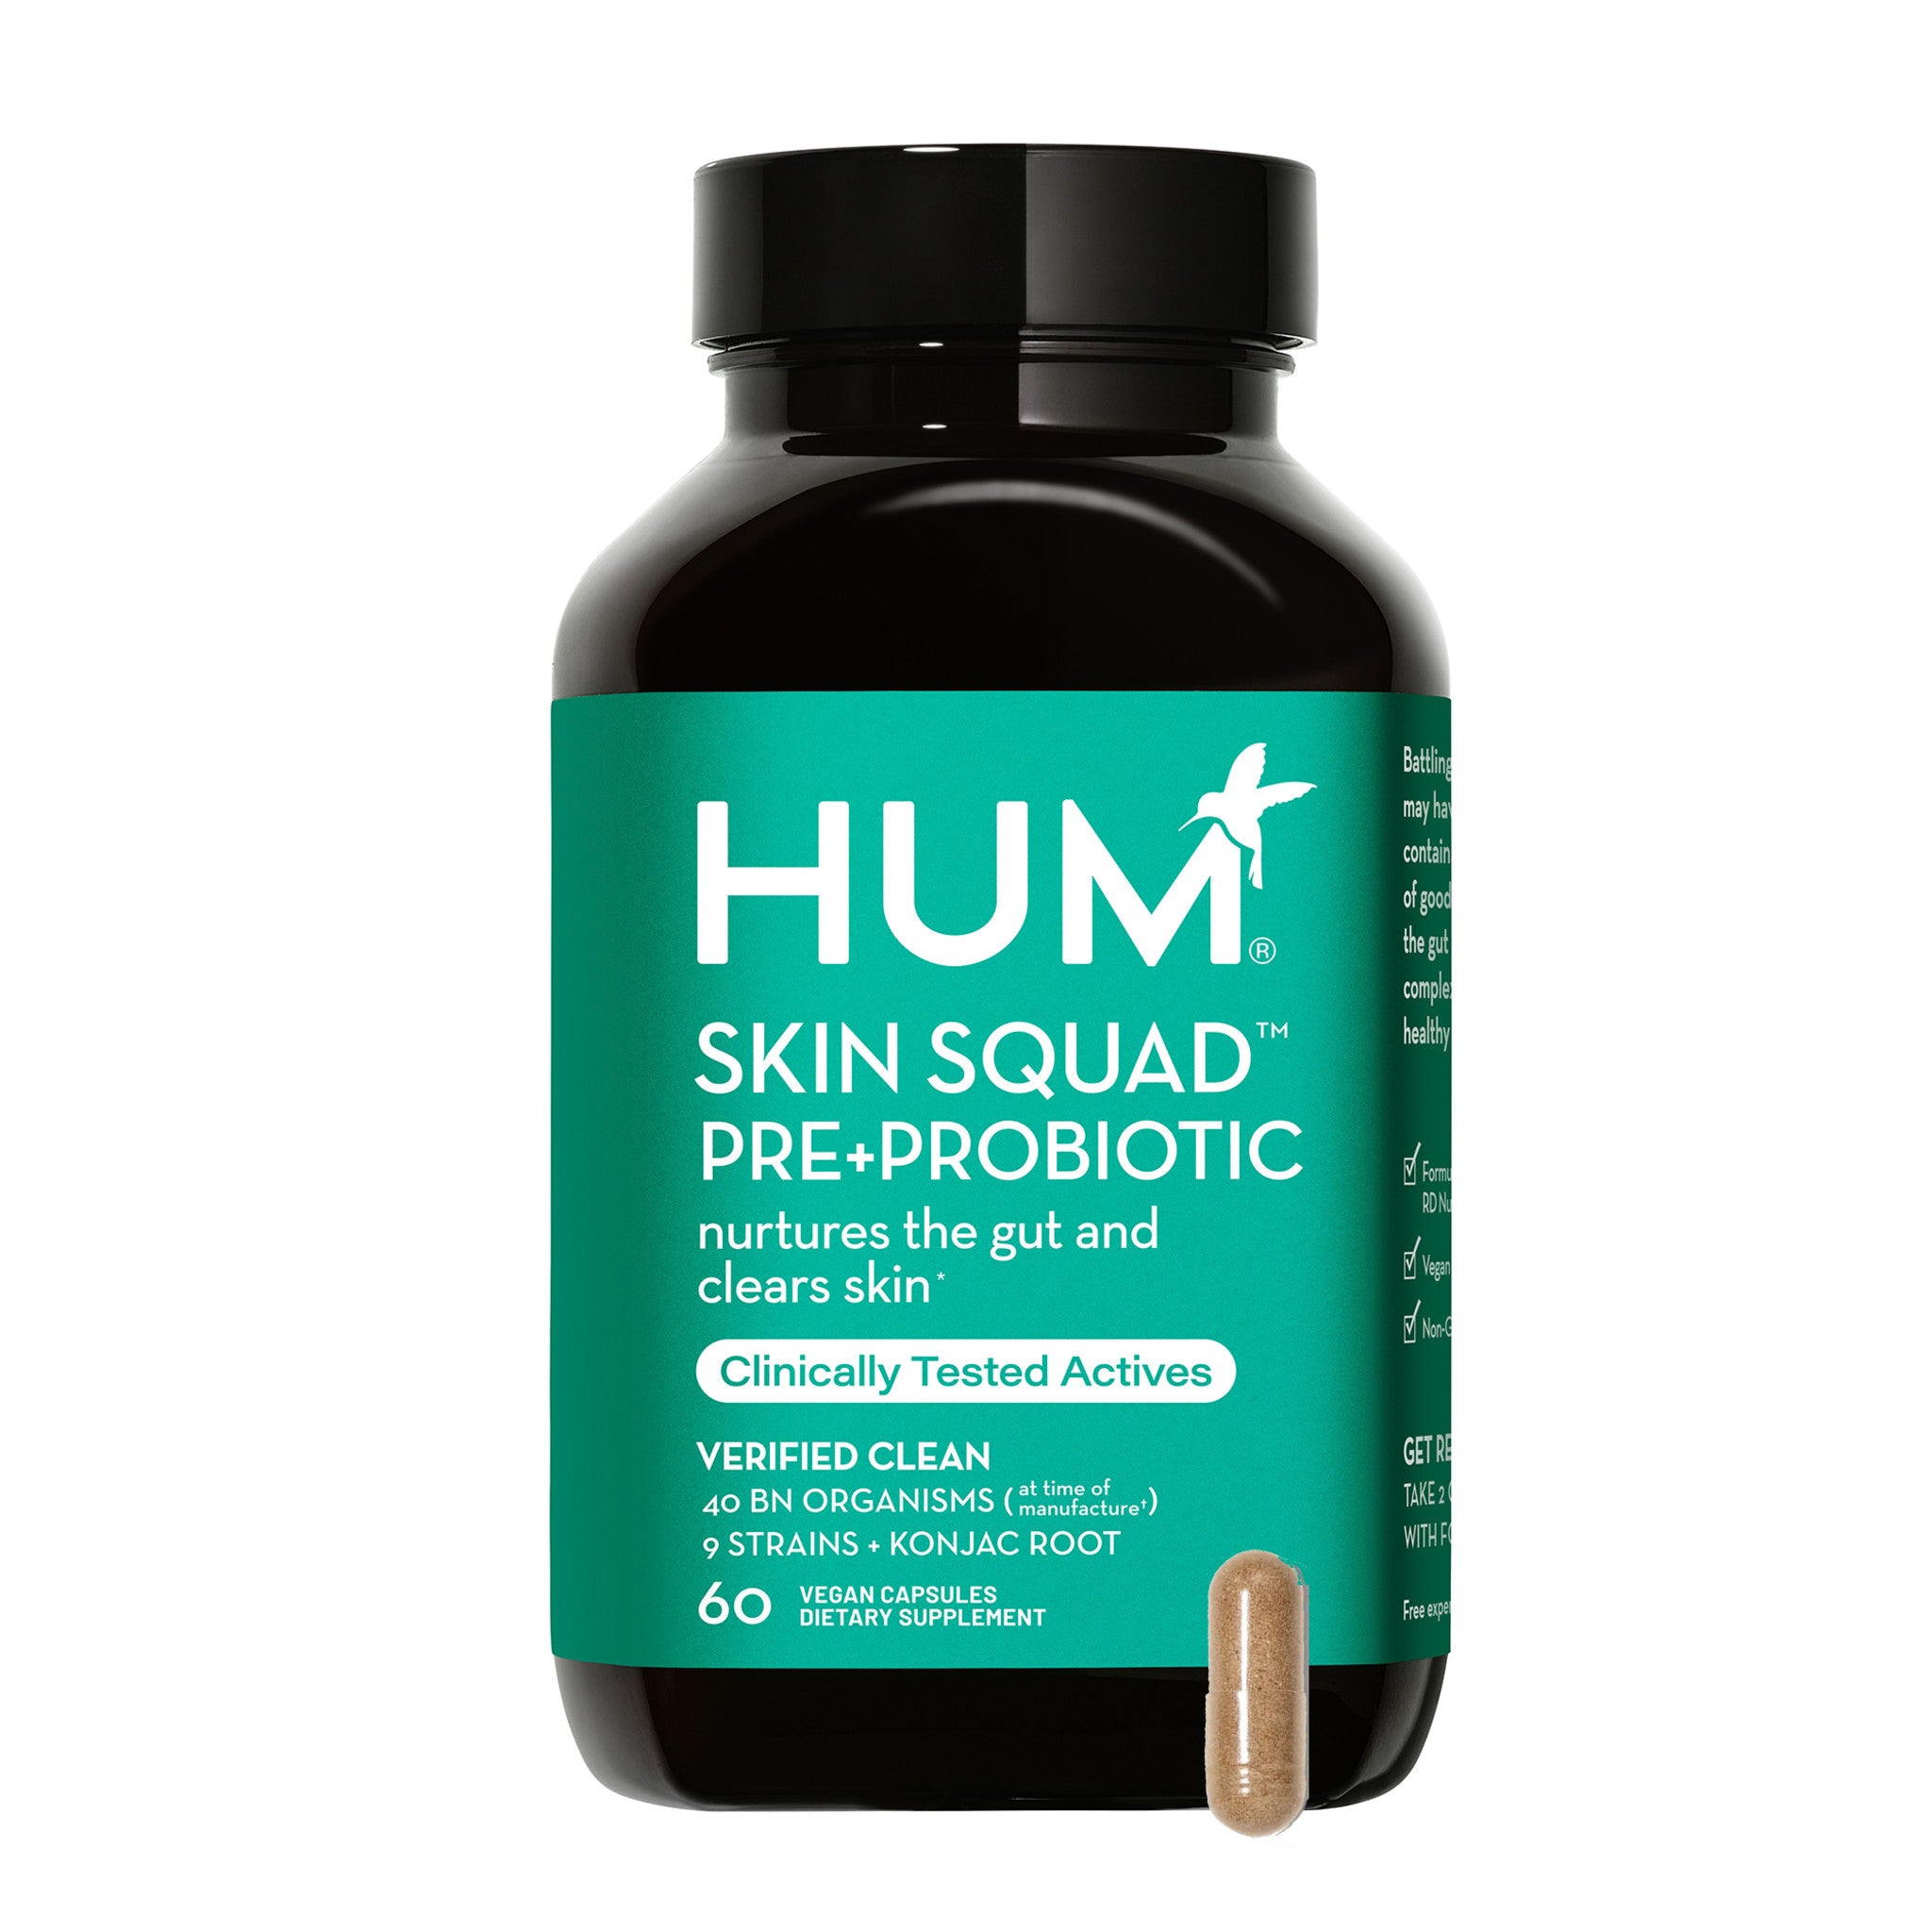 Hum Skin Squad Pre+Probiotic Clear Skin Supplement main image.